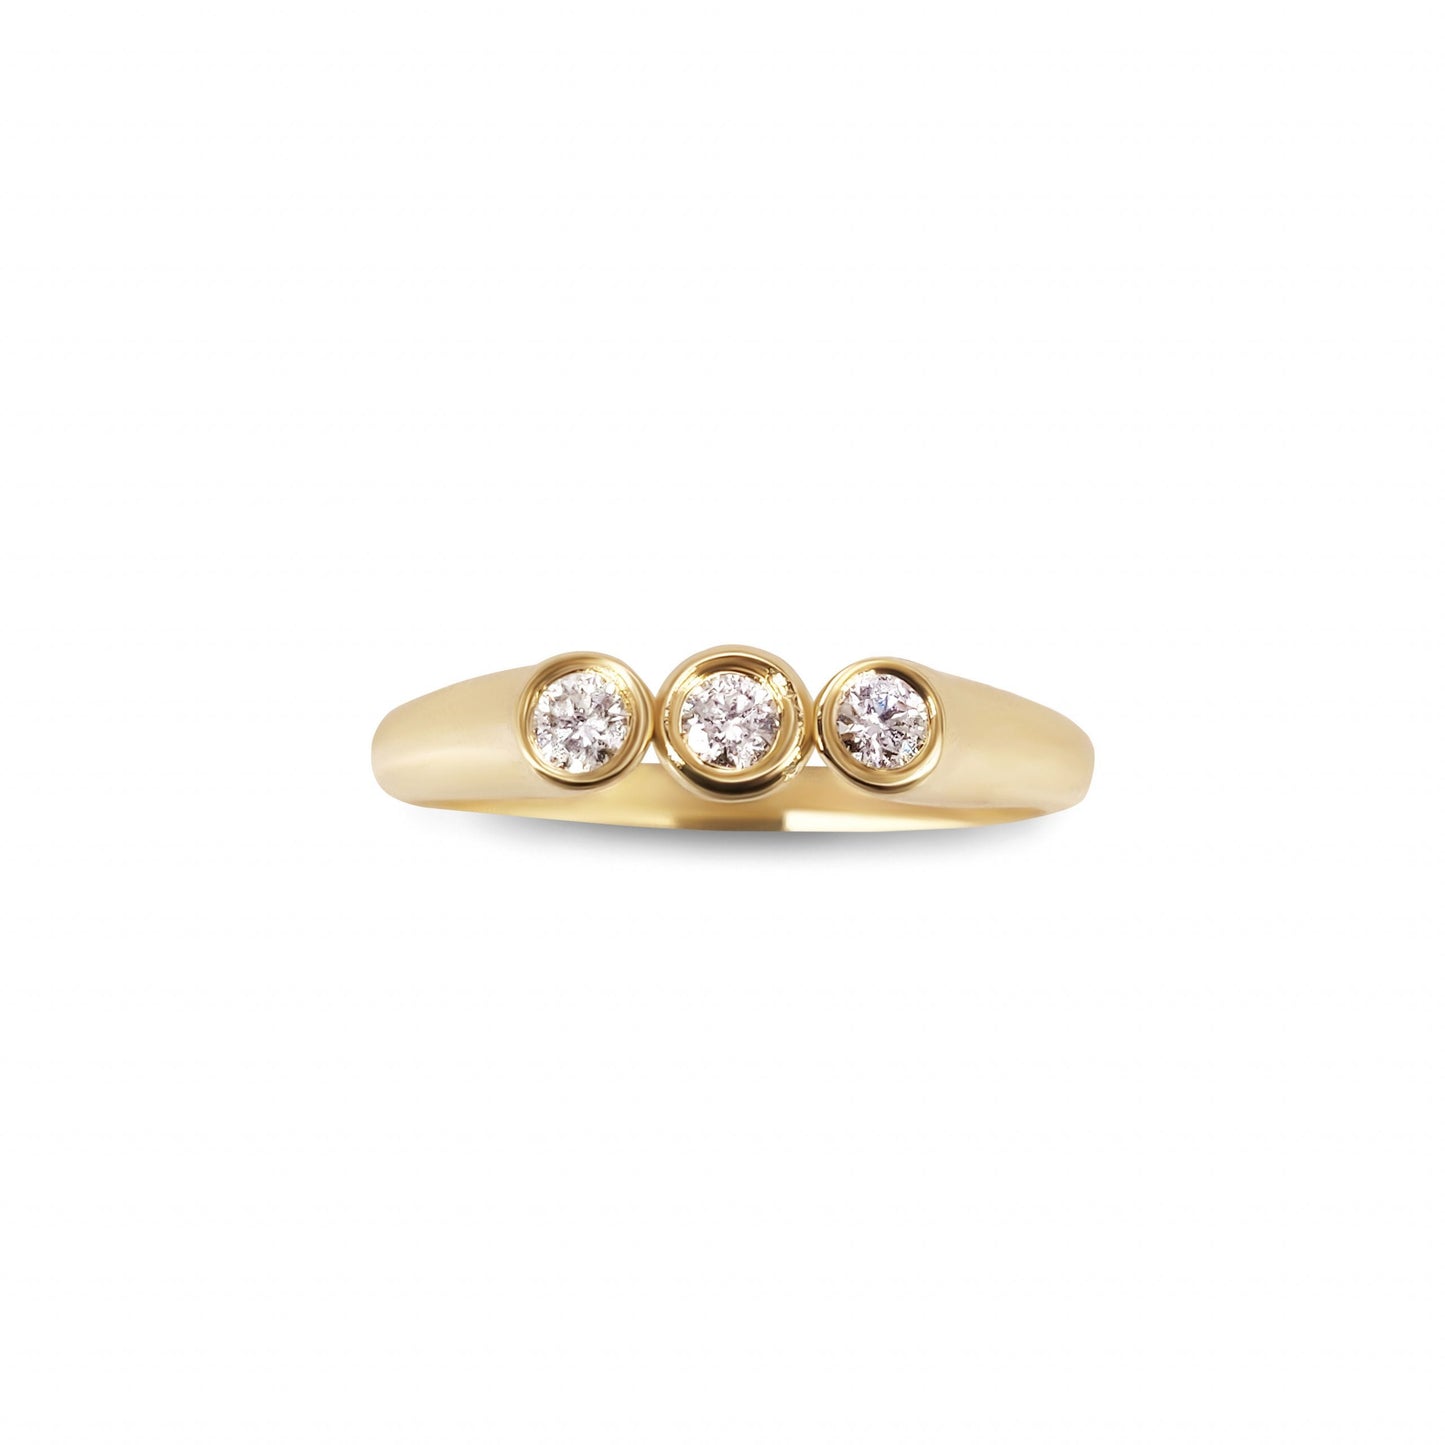 Amazing 0.06 SI2 Quality,Center Diamond , Total diamond wt. 0.18ct. 14K OR 18K Gold Bridal Engagement Wedding Anniversary Gift Ring